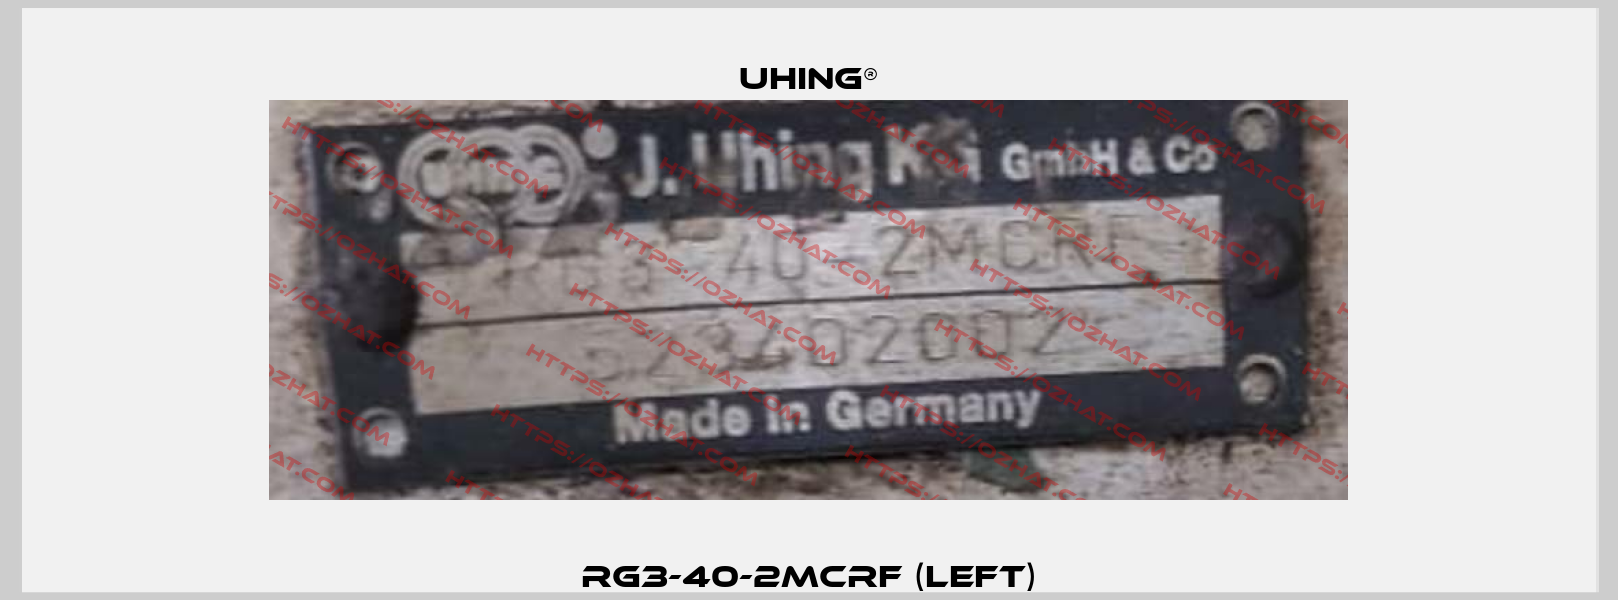 RG3-40-2MCRF (left) Uhing®